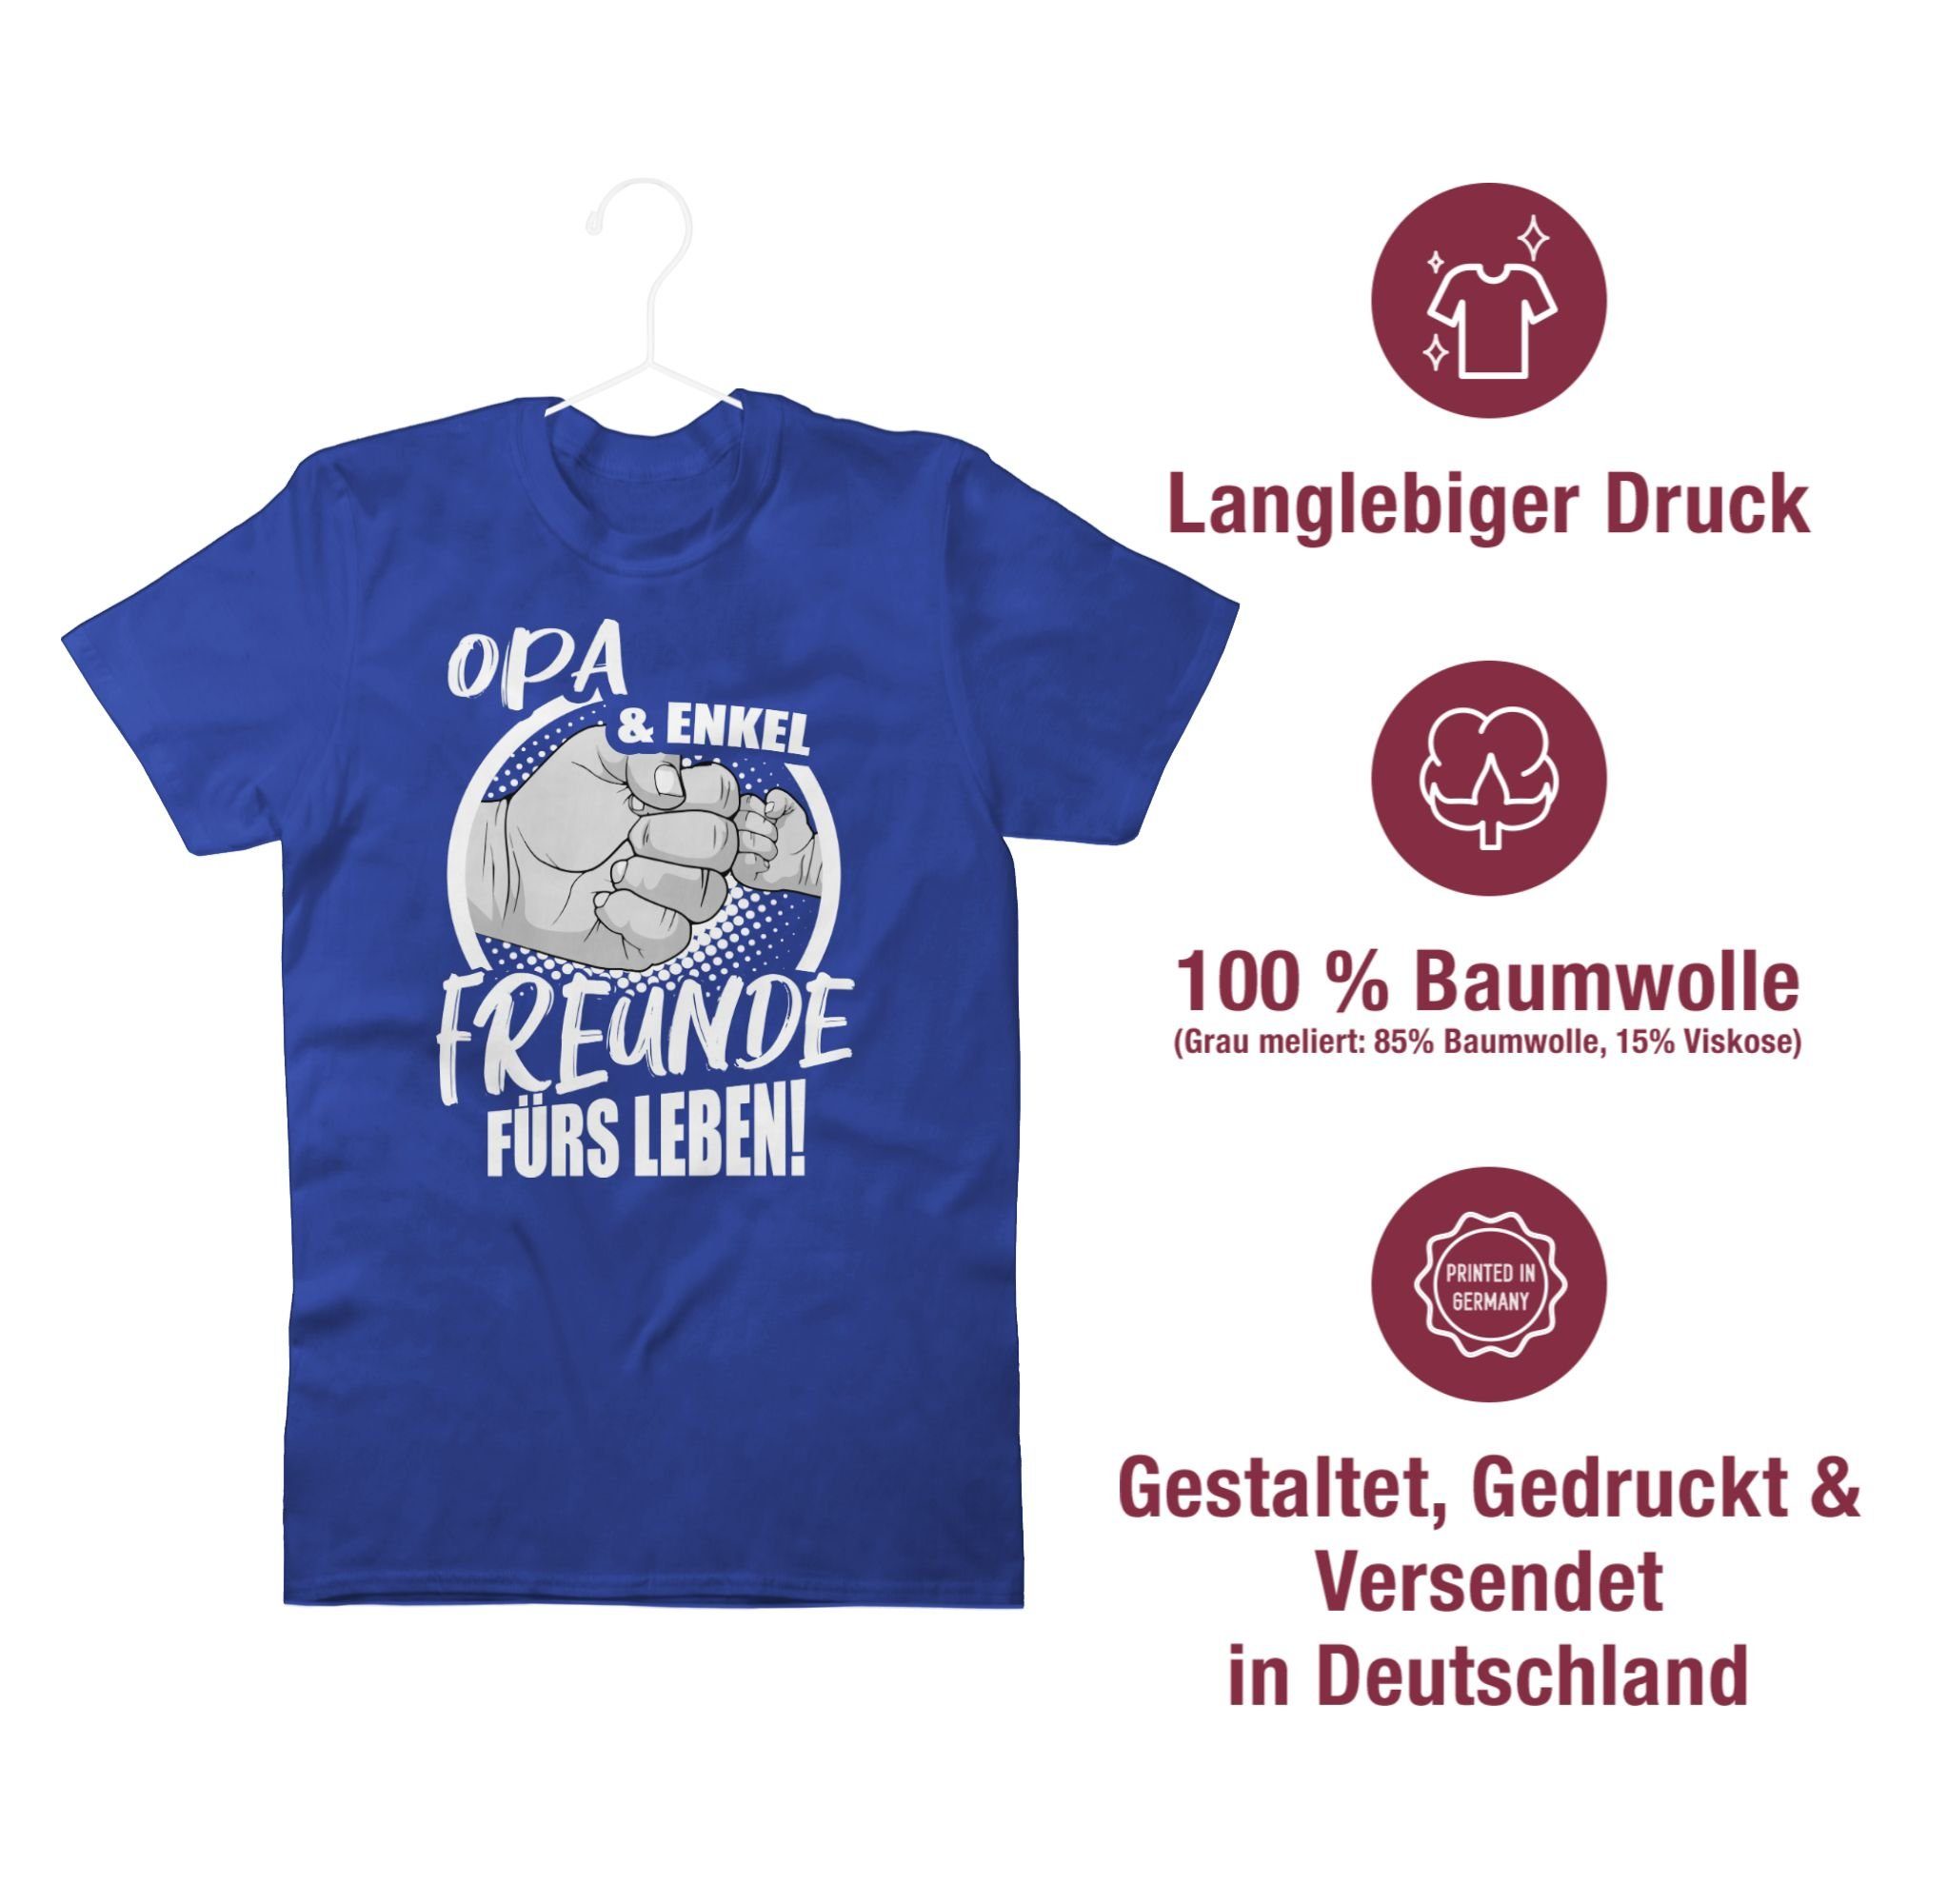 Royalblau Geschenke Opa 3 Freunde Opa & Leben! T-Shirt fürs Shirtracer Enkel